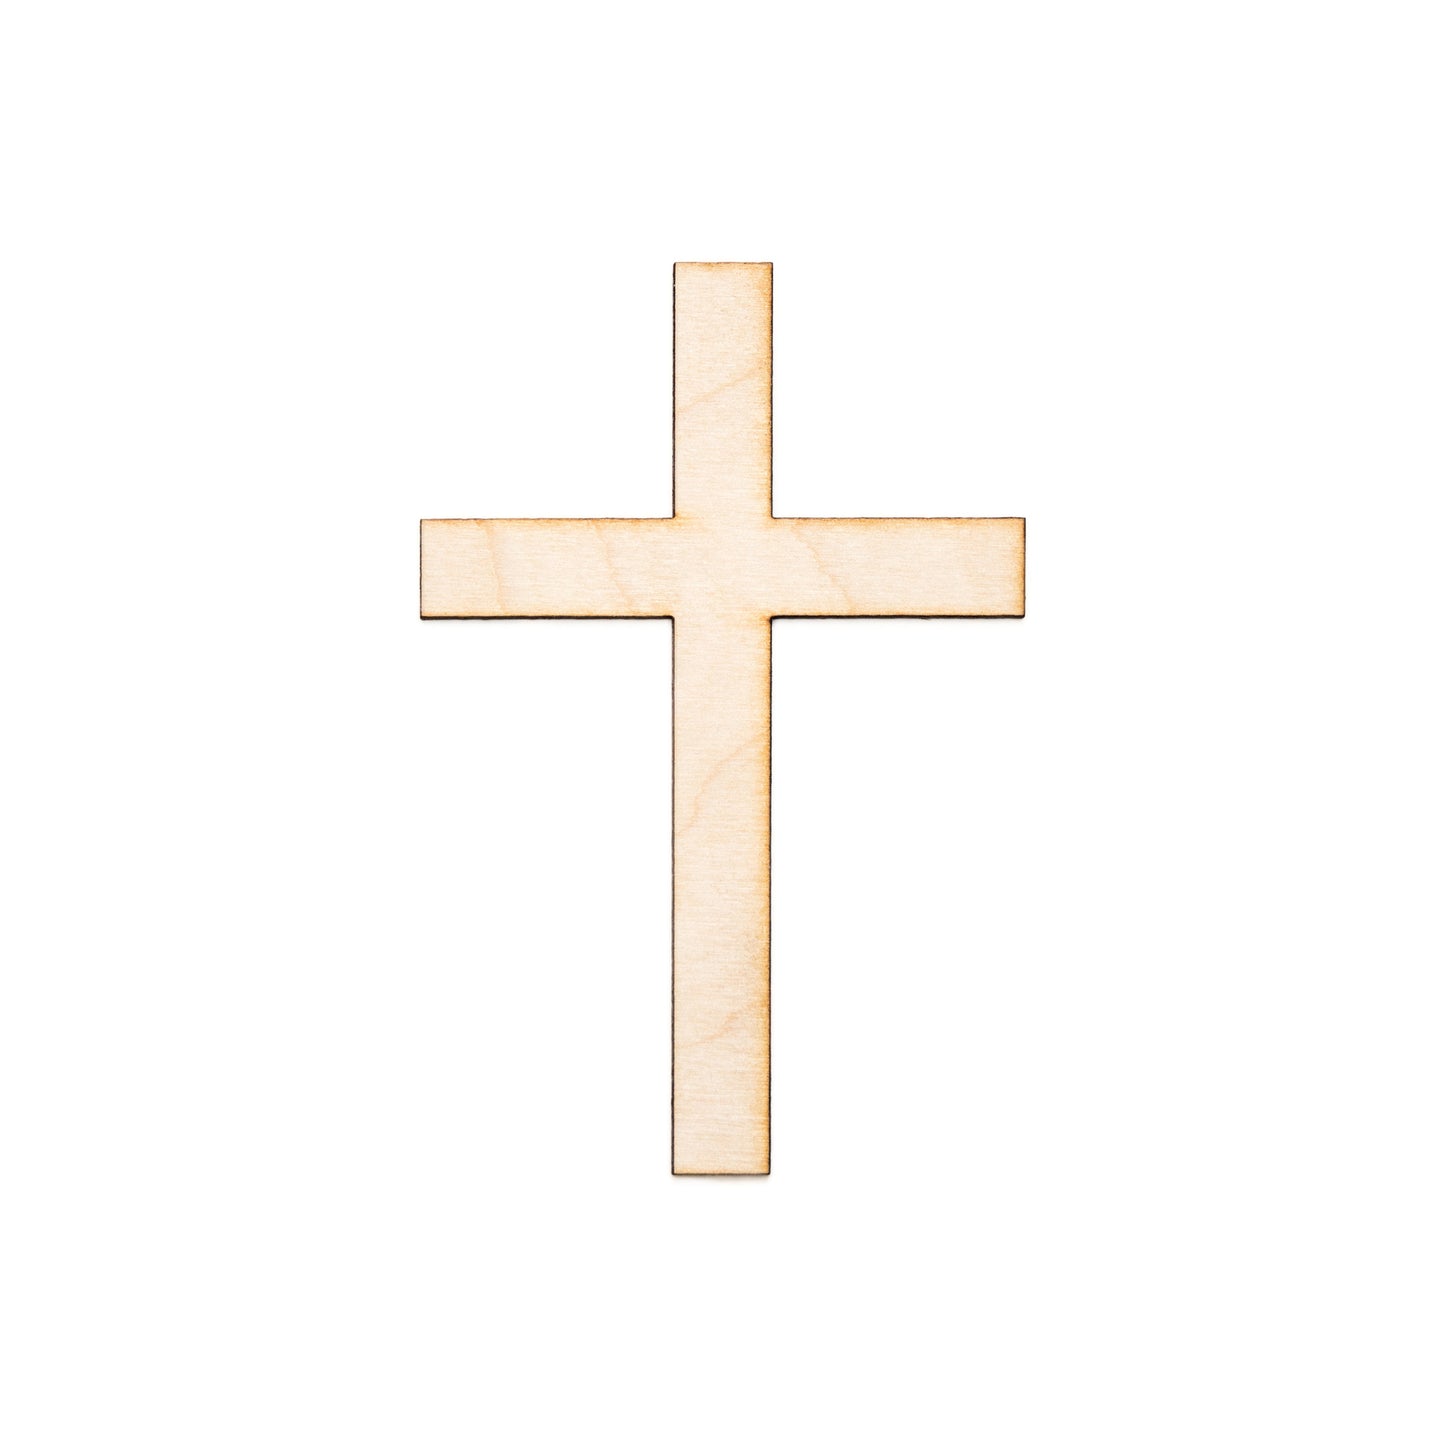 Unfinished Wooden Crosses Crafts, Diy Wooden Crosses Crafts